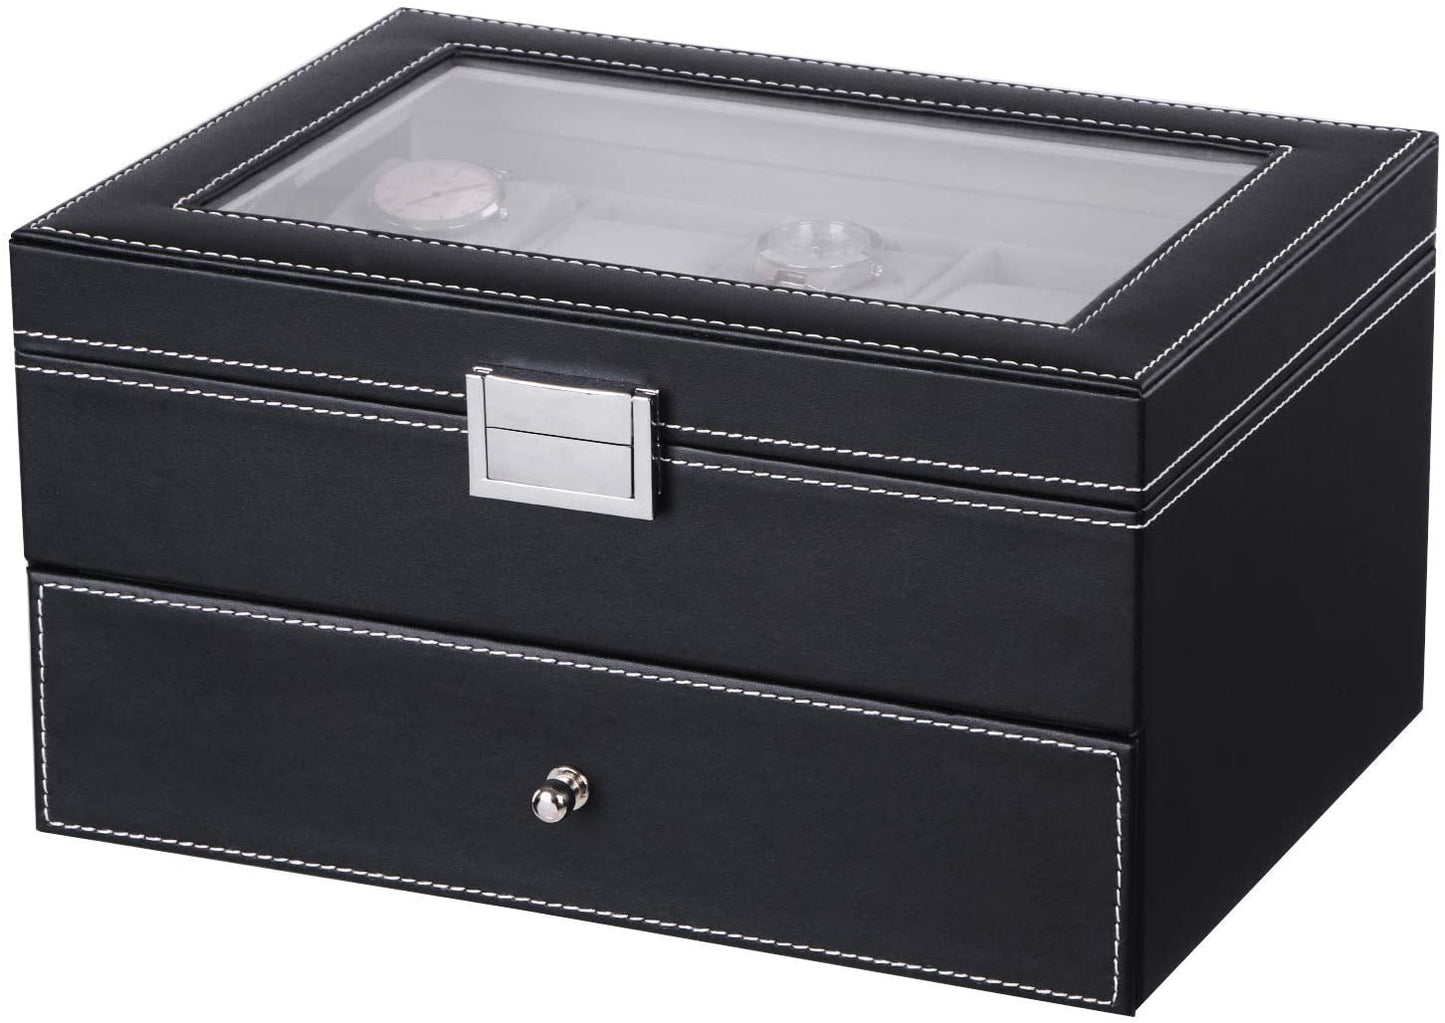 BEWISHOME Watch Box Organizer 20 Men Display Storage Case Metal Hinge Black PU Leather Glass Top Large Holder SSH04B - (For 6 piece(s))